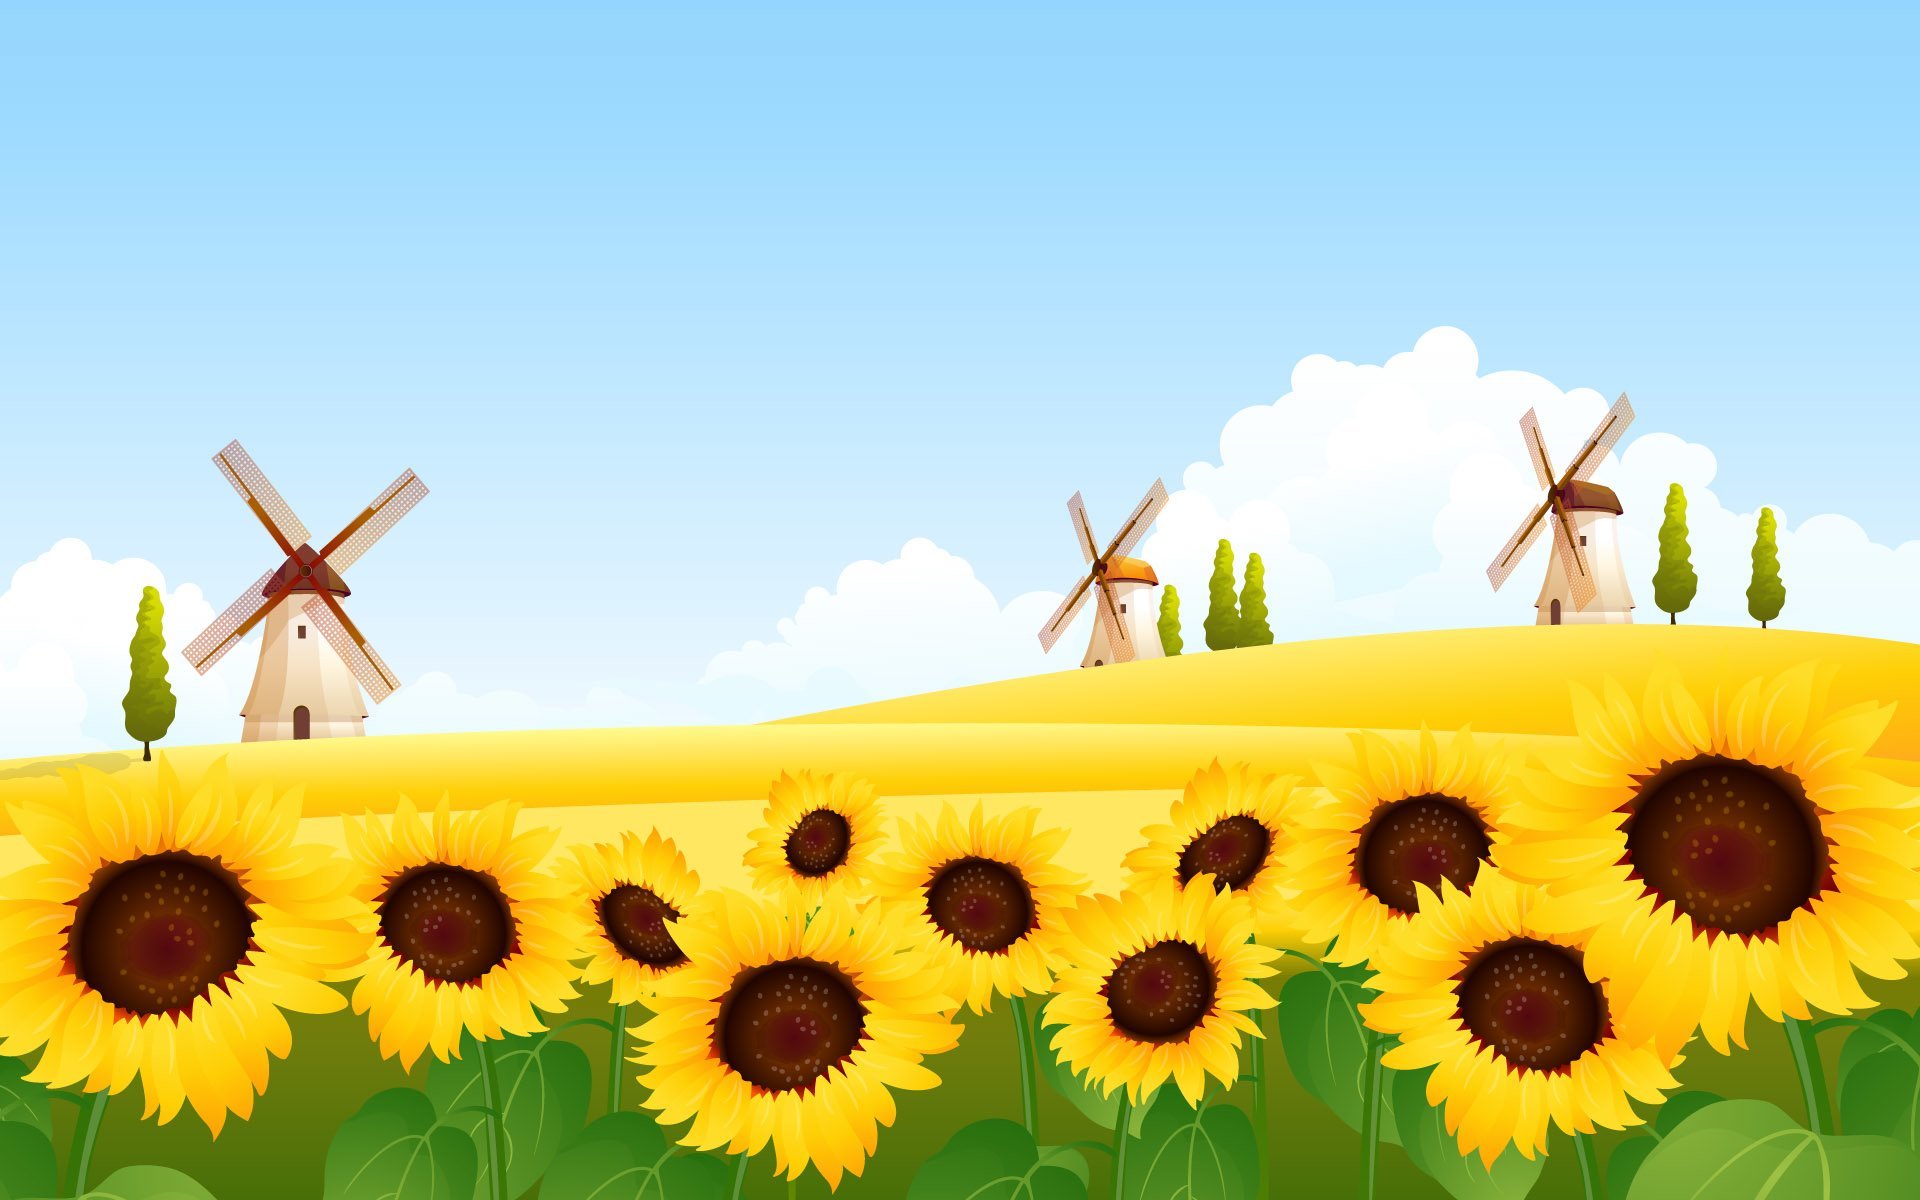 Artistic Windmills in Sunflower Field